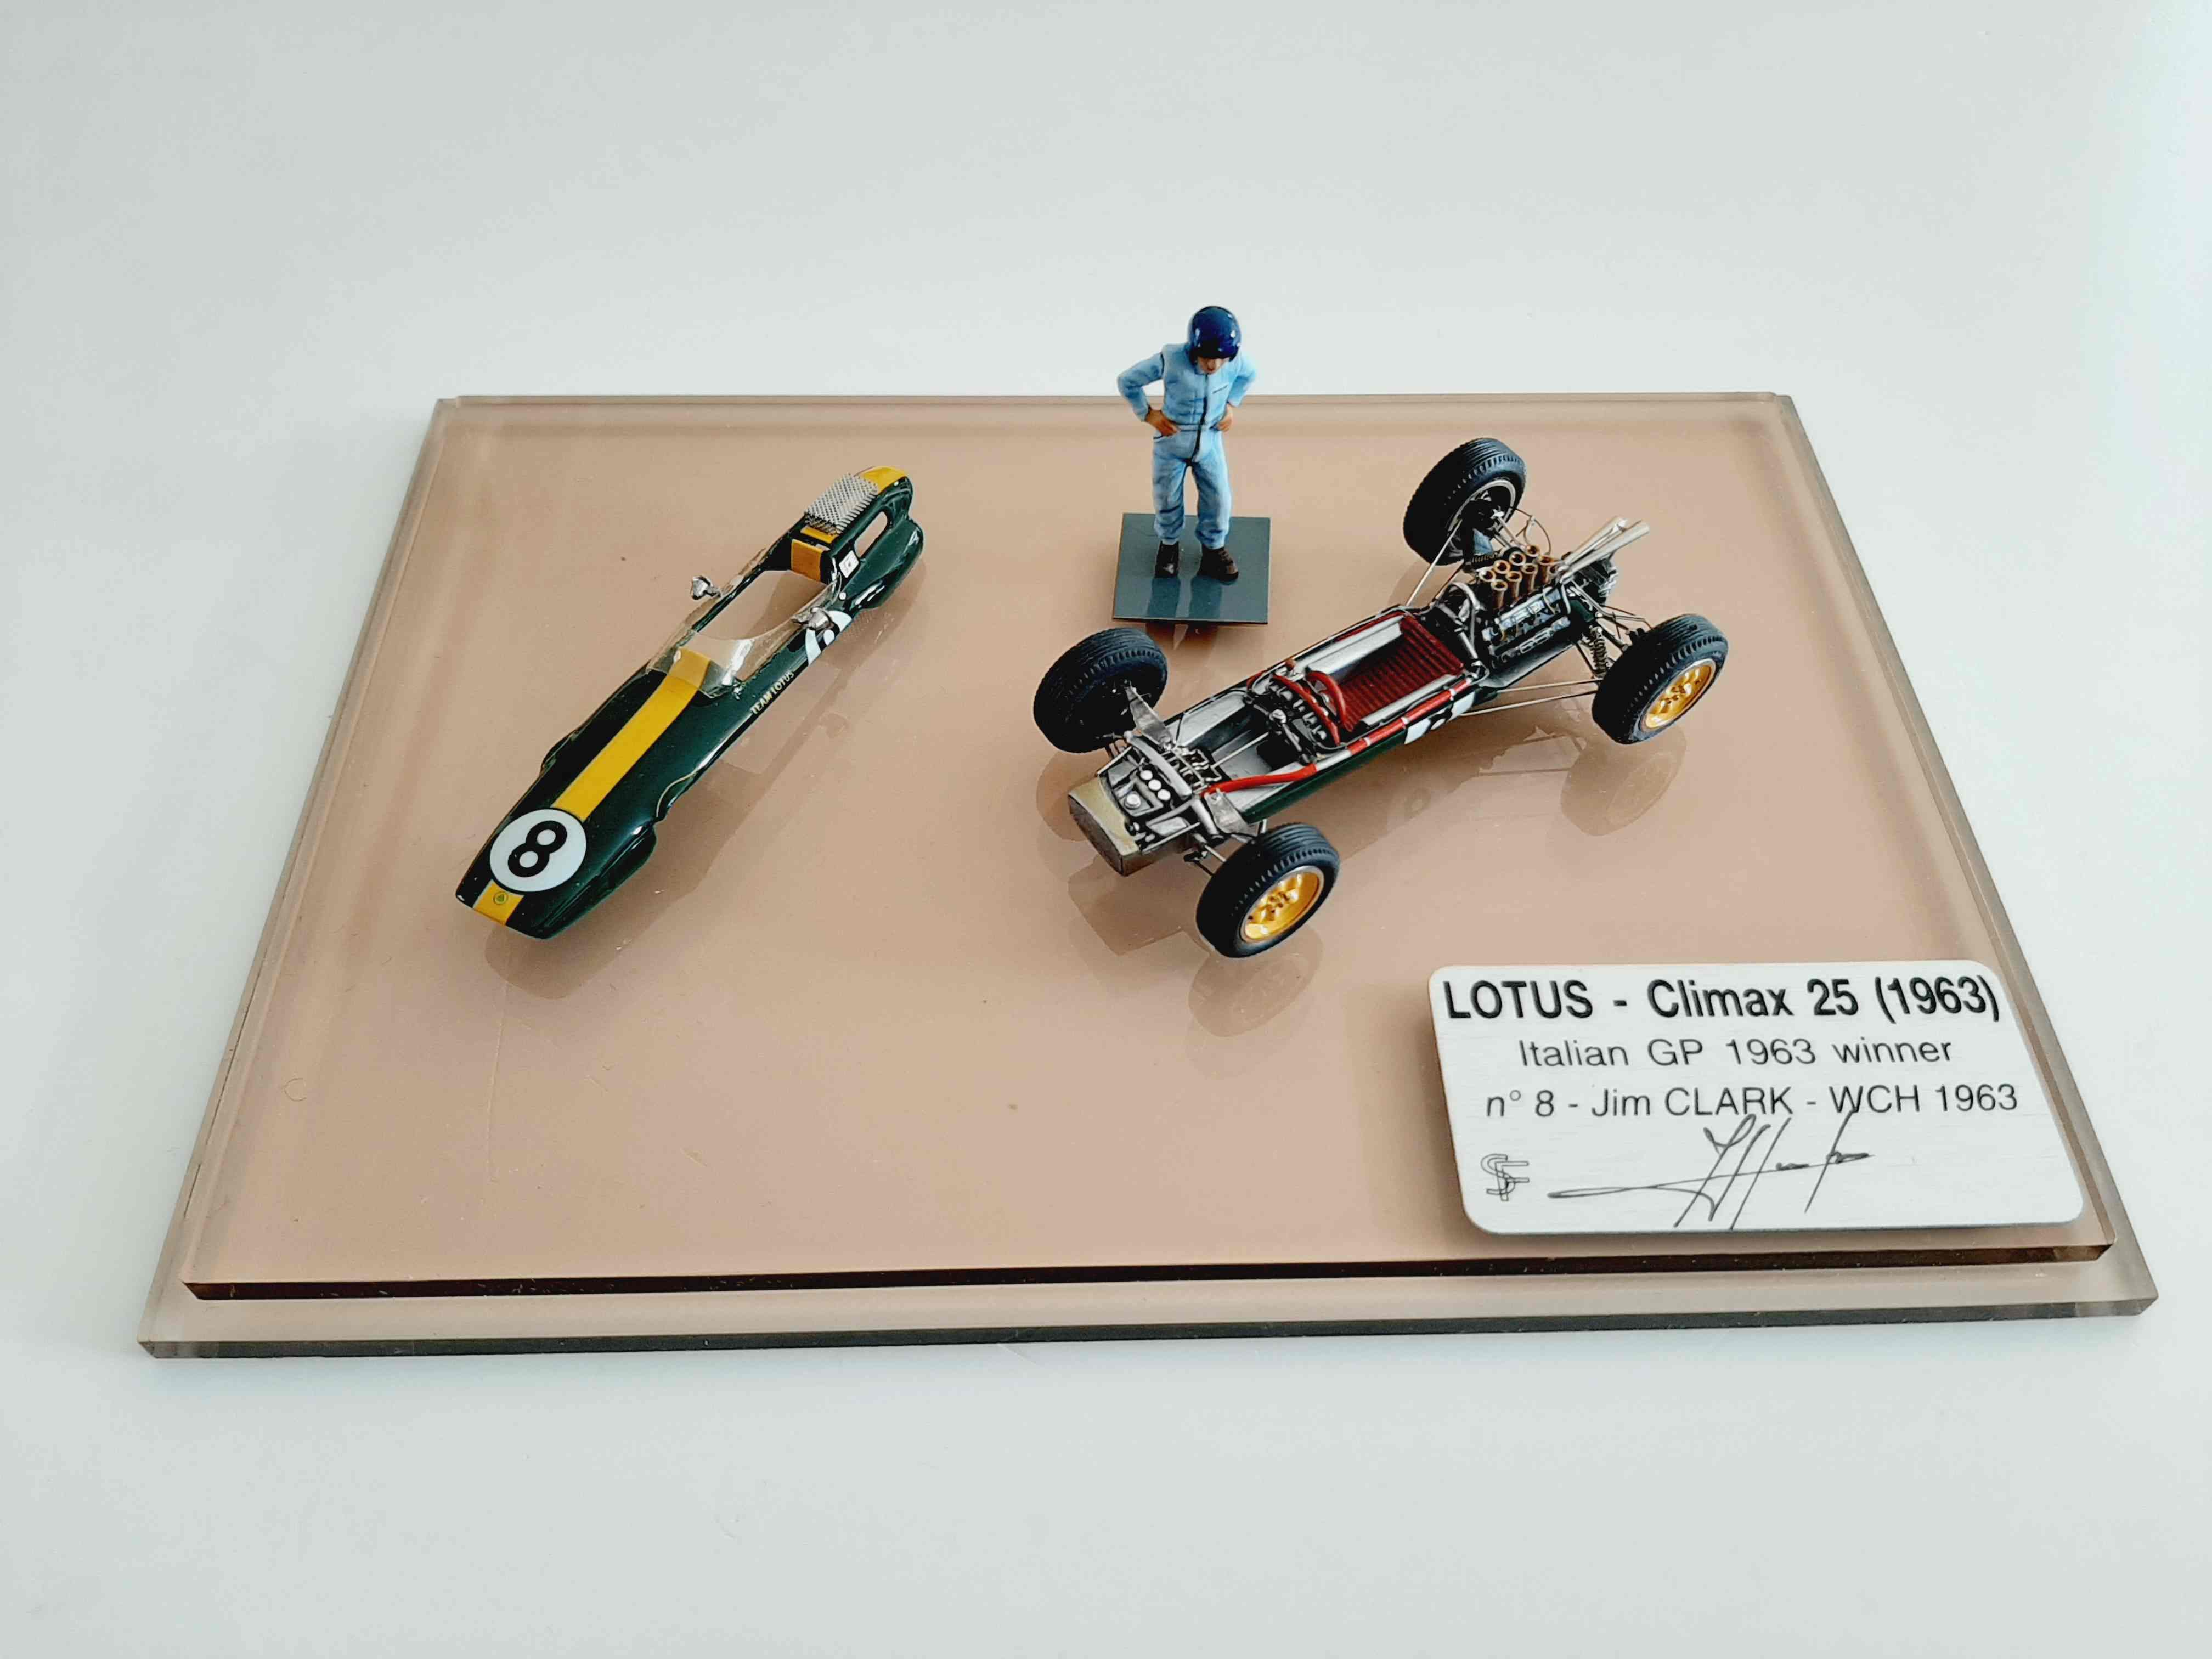 F. Suber : Lotus 25 Winner GP Italy 1963